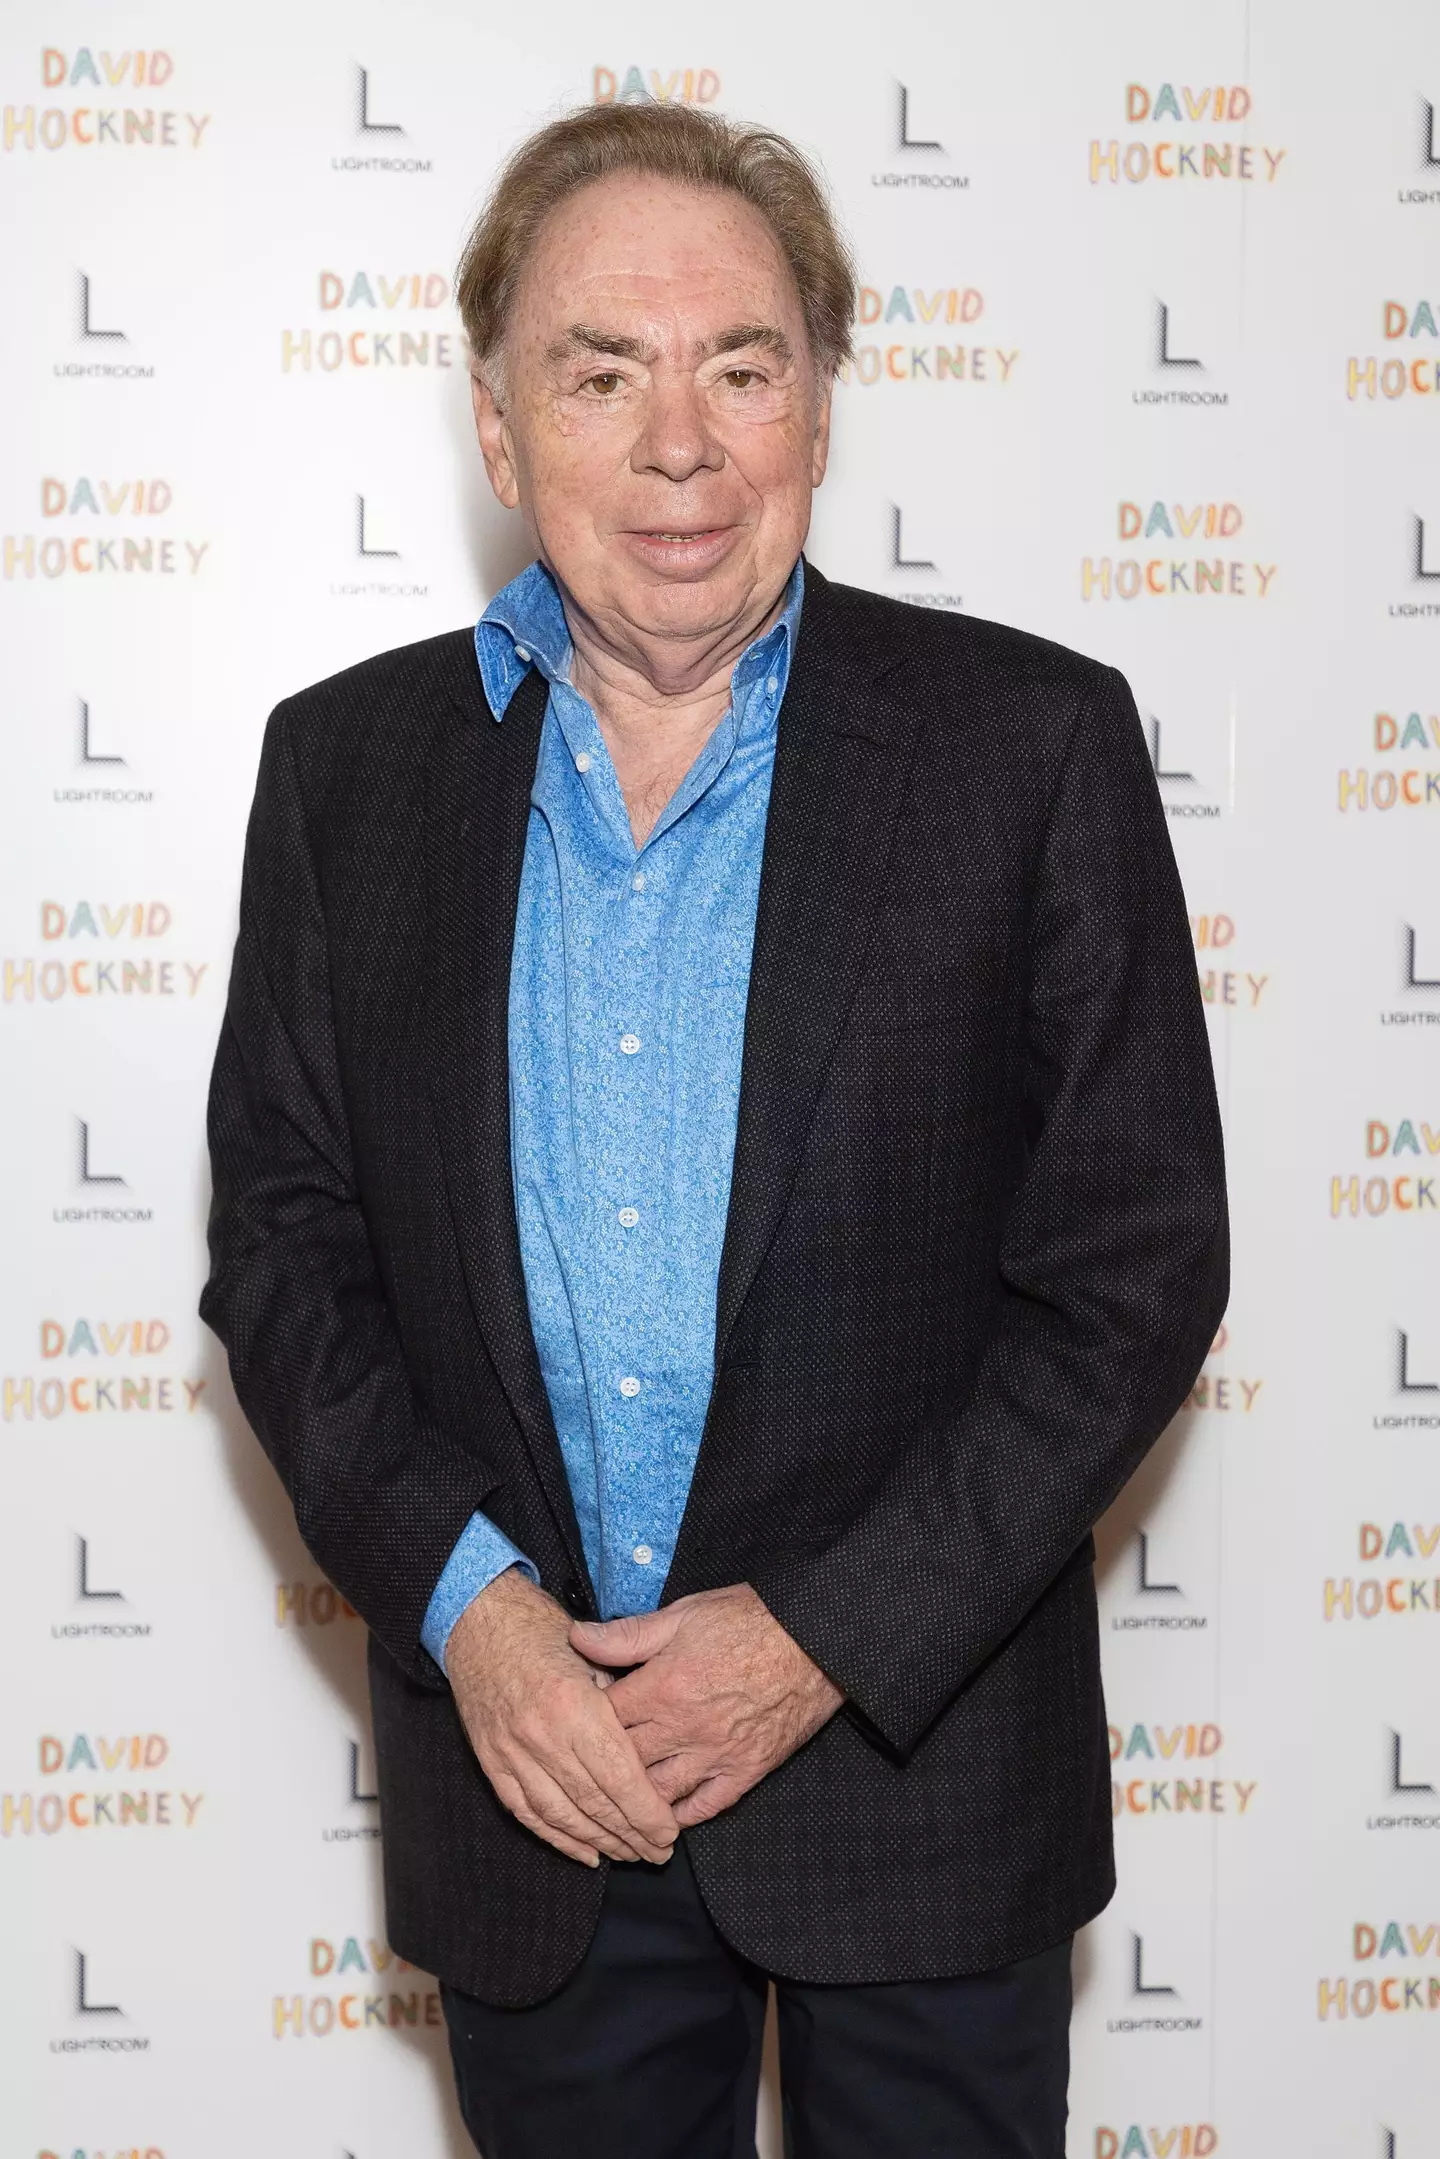 Andrew Lloyd Webber has announced the death of his eldest son Nicholas.